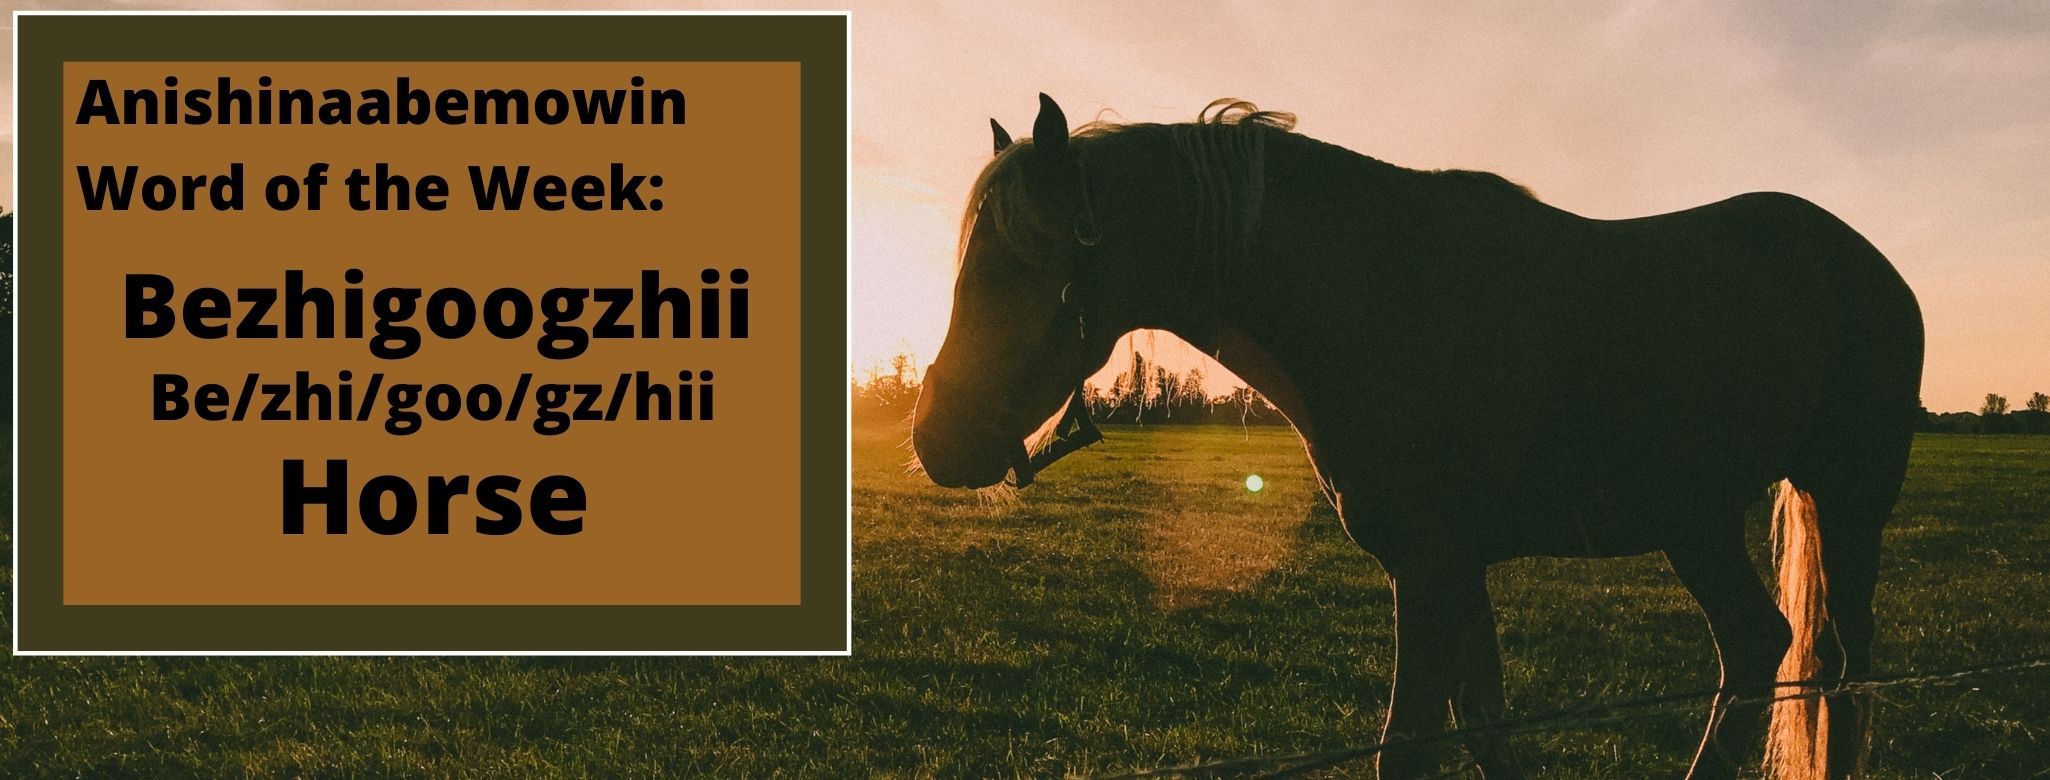 Anishinaabemowin Word of the Week Bezhigoogzhii Horse